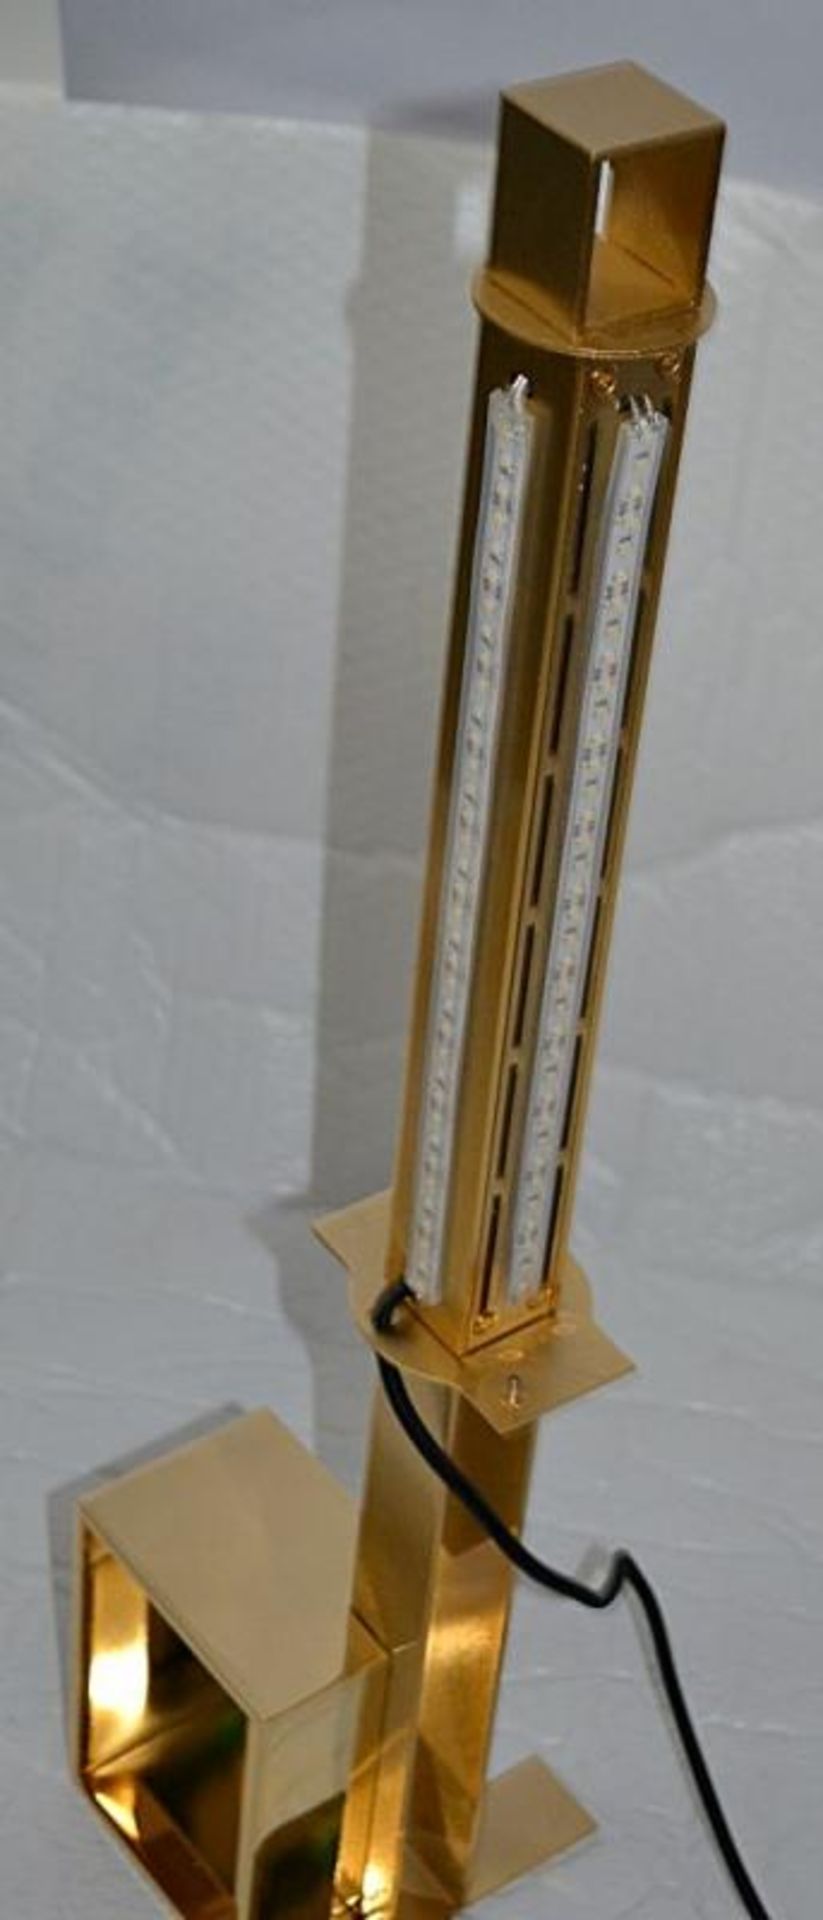 1 x FENDI CASA Chiara Bedside Lamp in Gold - Dimensions: H74 x W16 x D16cm - Ref: 4822331B - CL087 - - Image 5 of 14